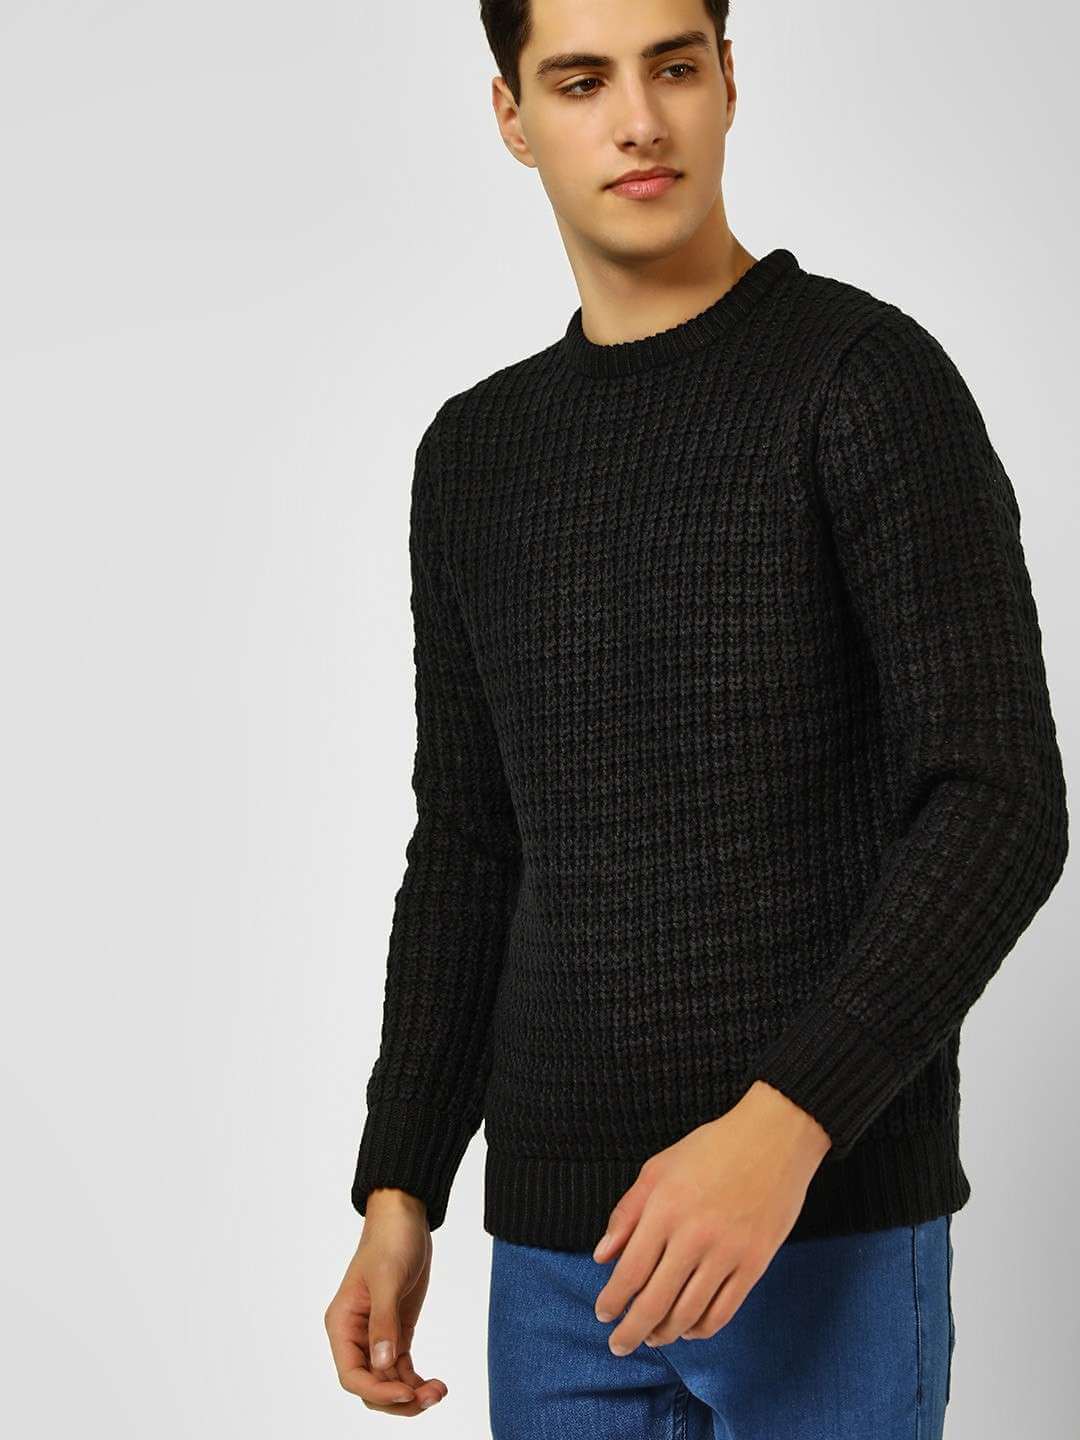 Sweater4